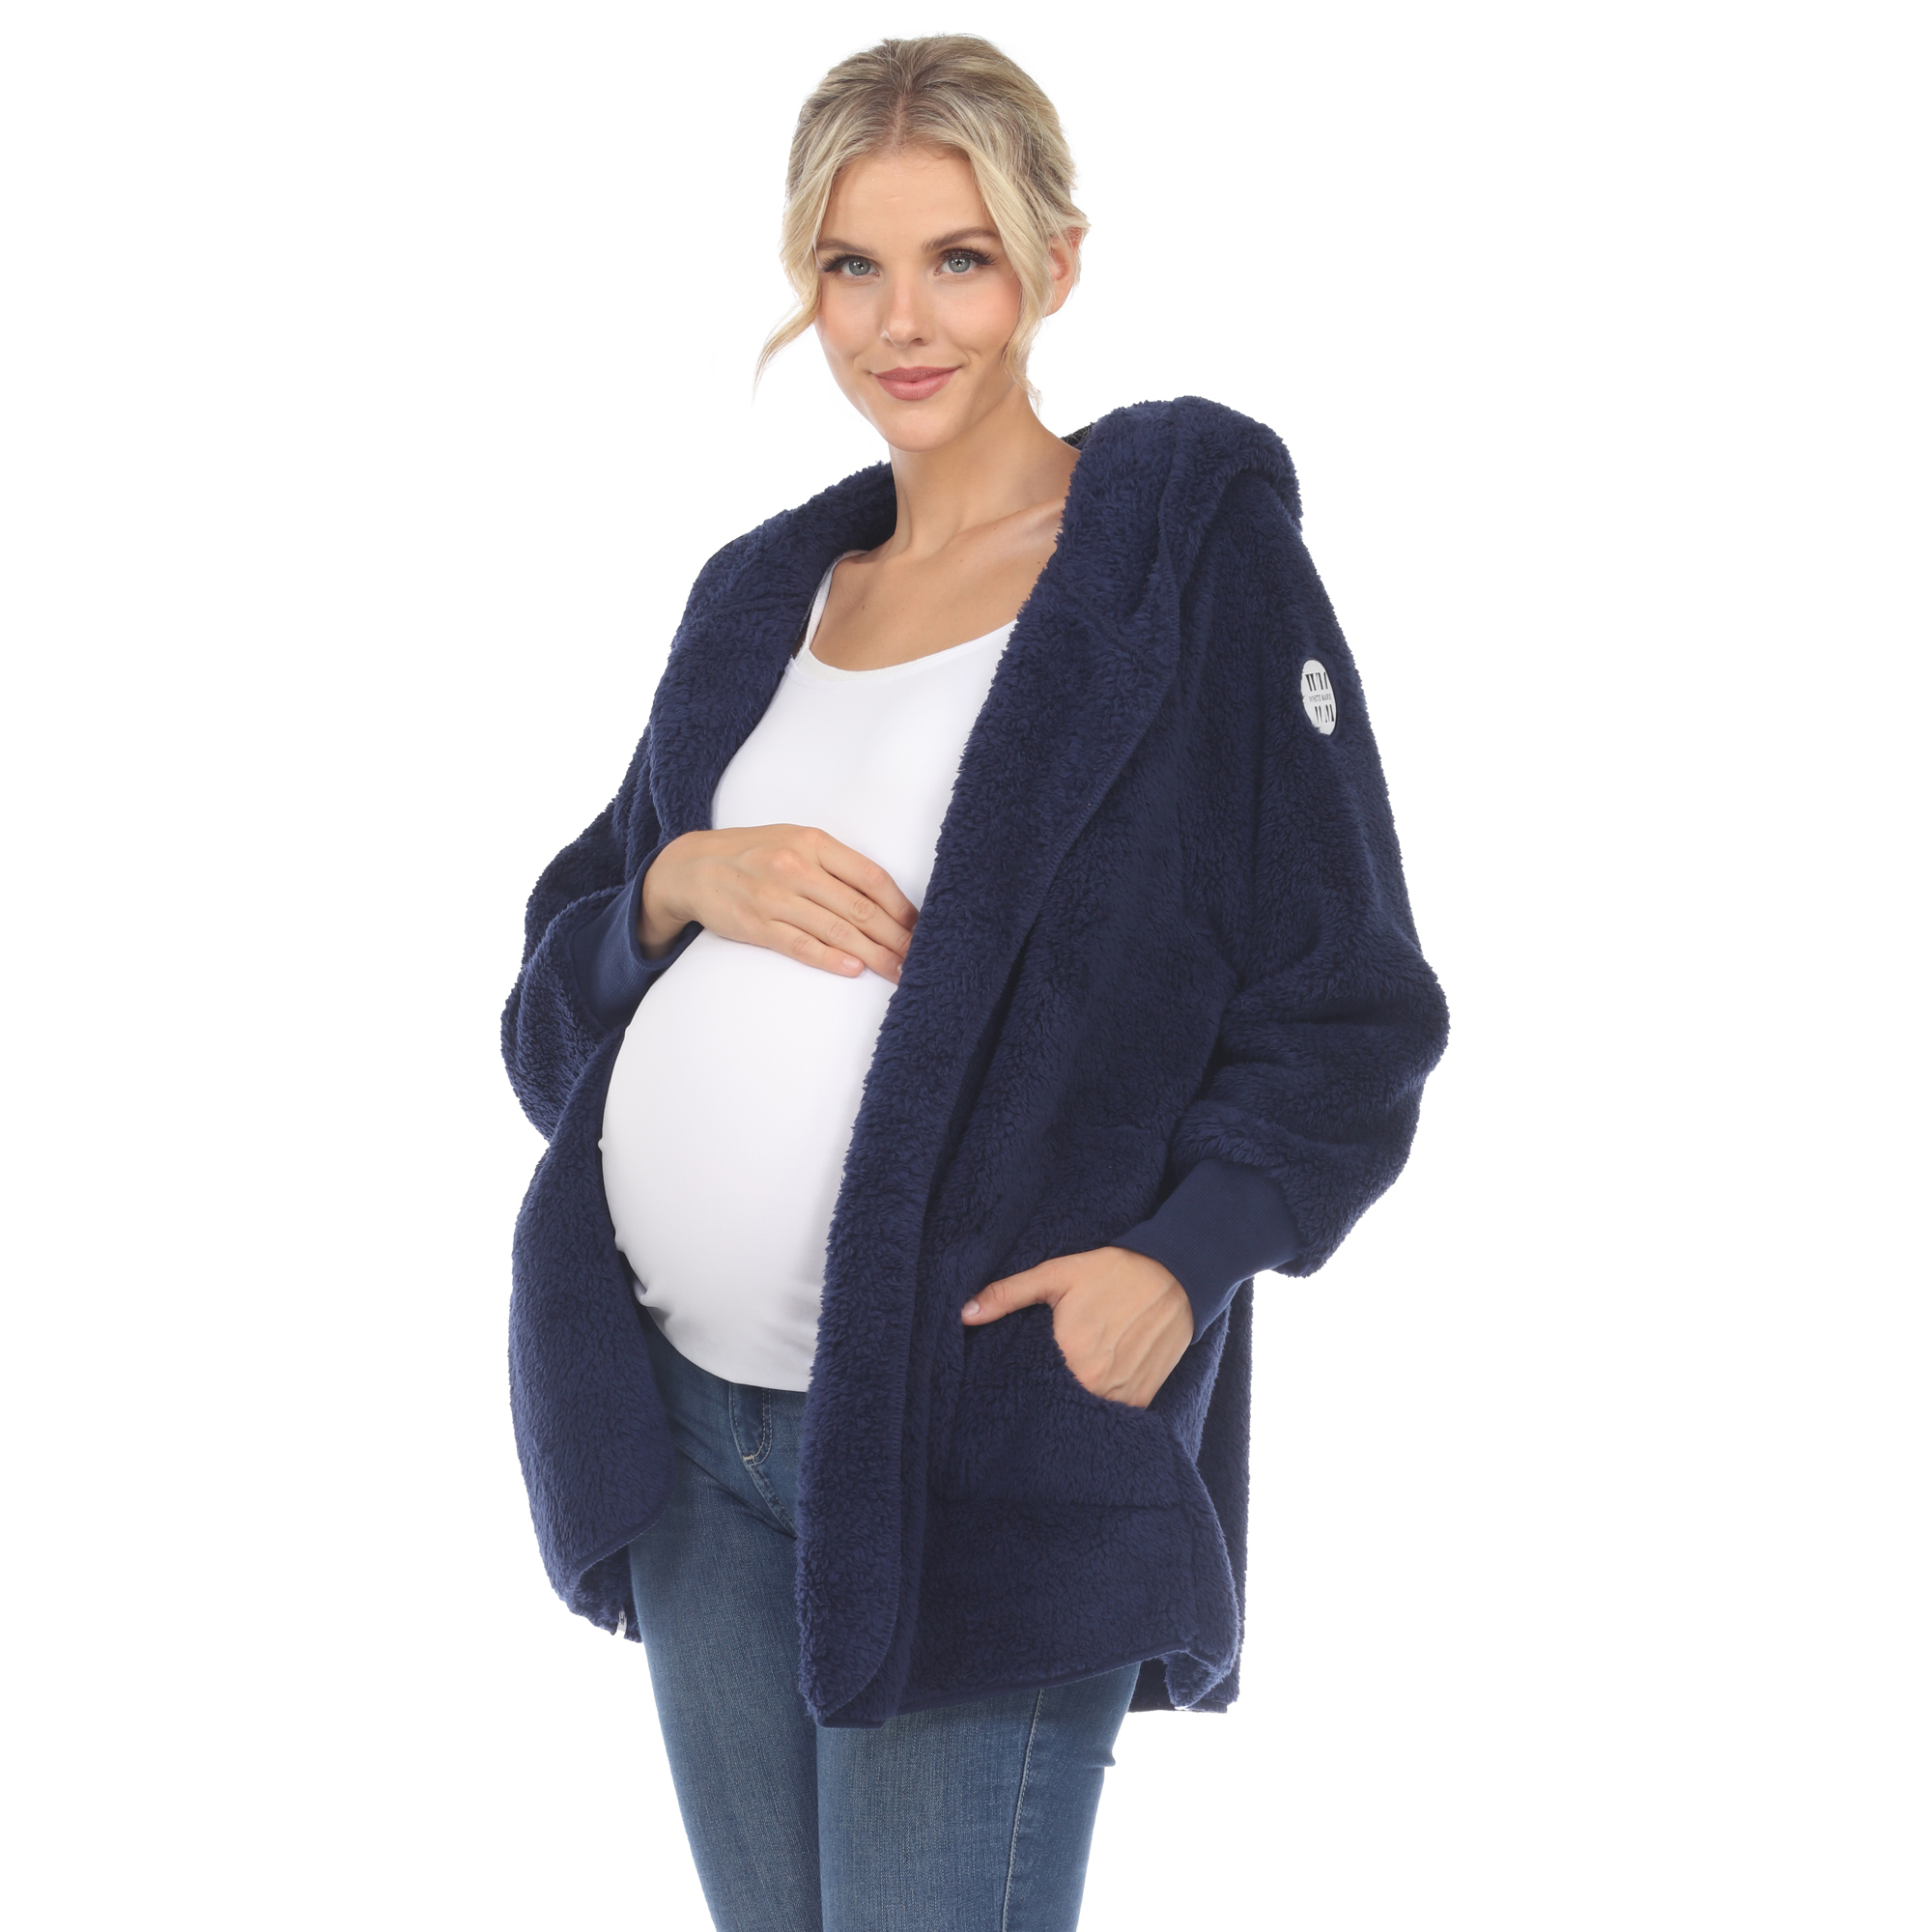 White Mark Womenâs Maternity Plush Hooded Cardigan With Pockets - Navy, S/M